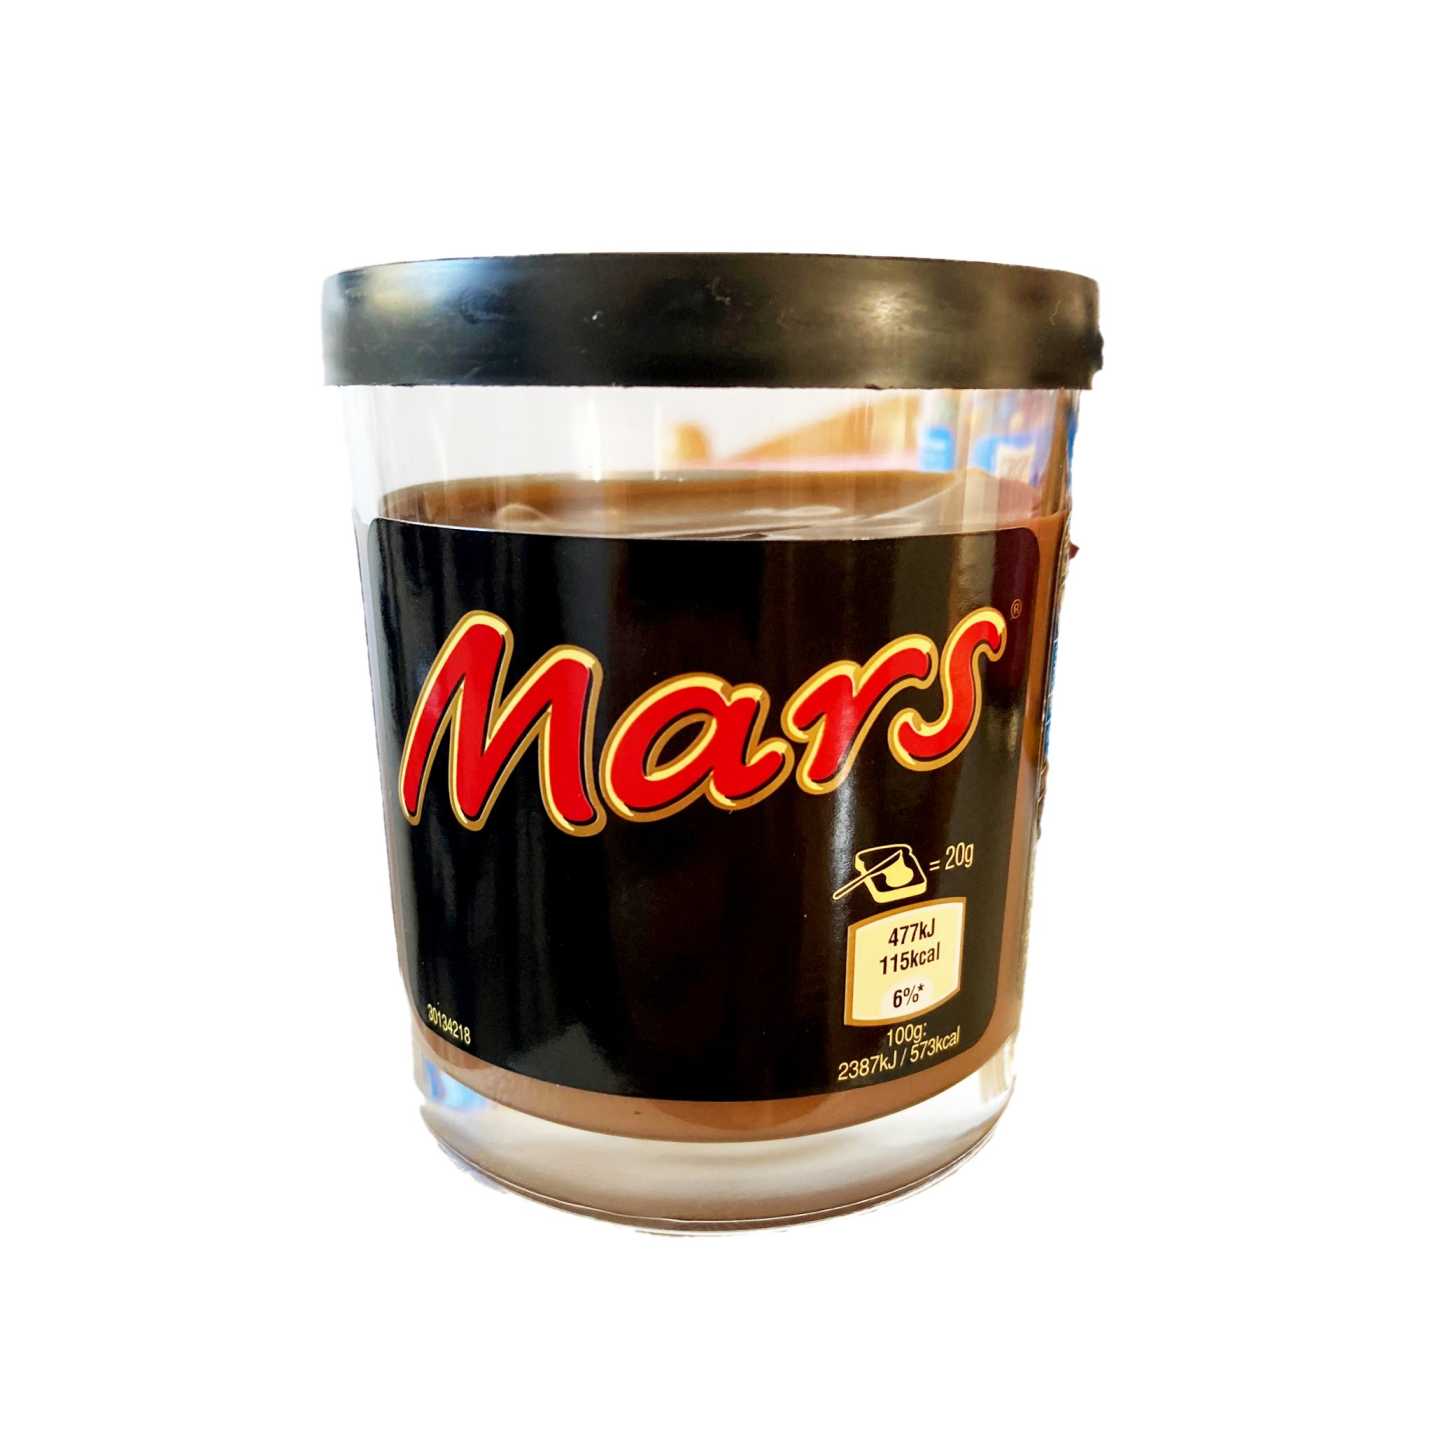 Mars Spread ממרח מארס - טעימים